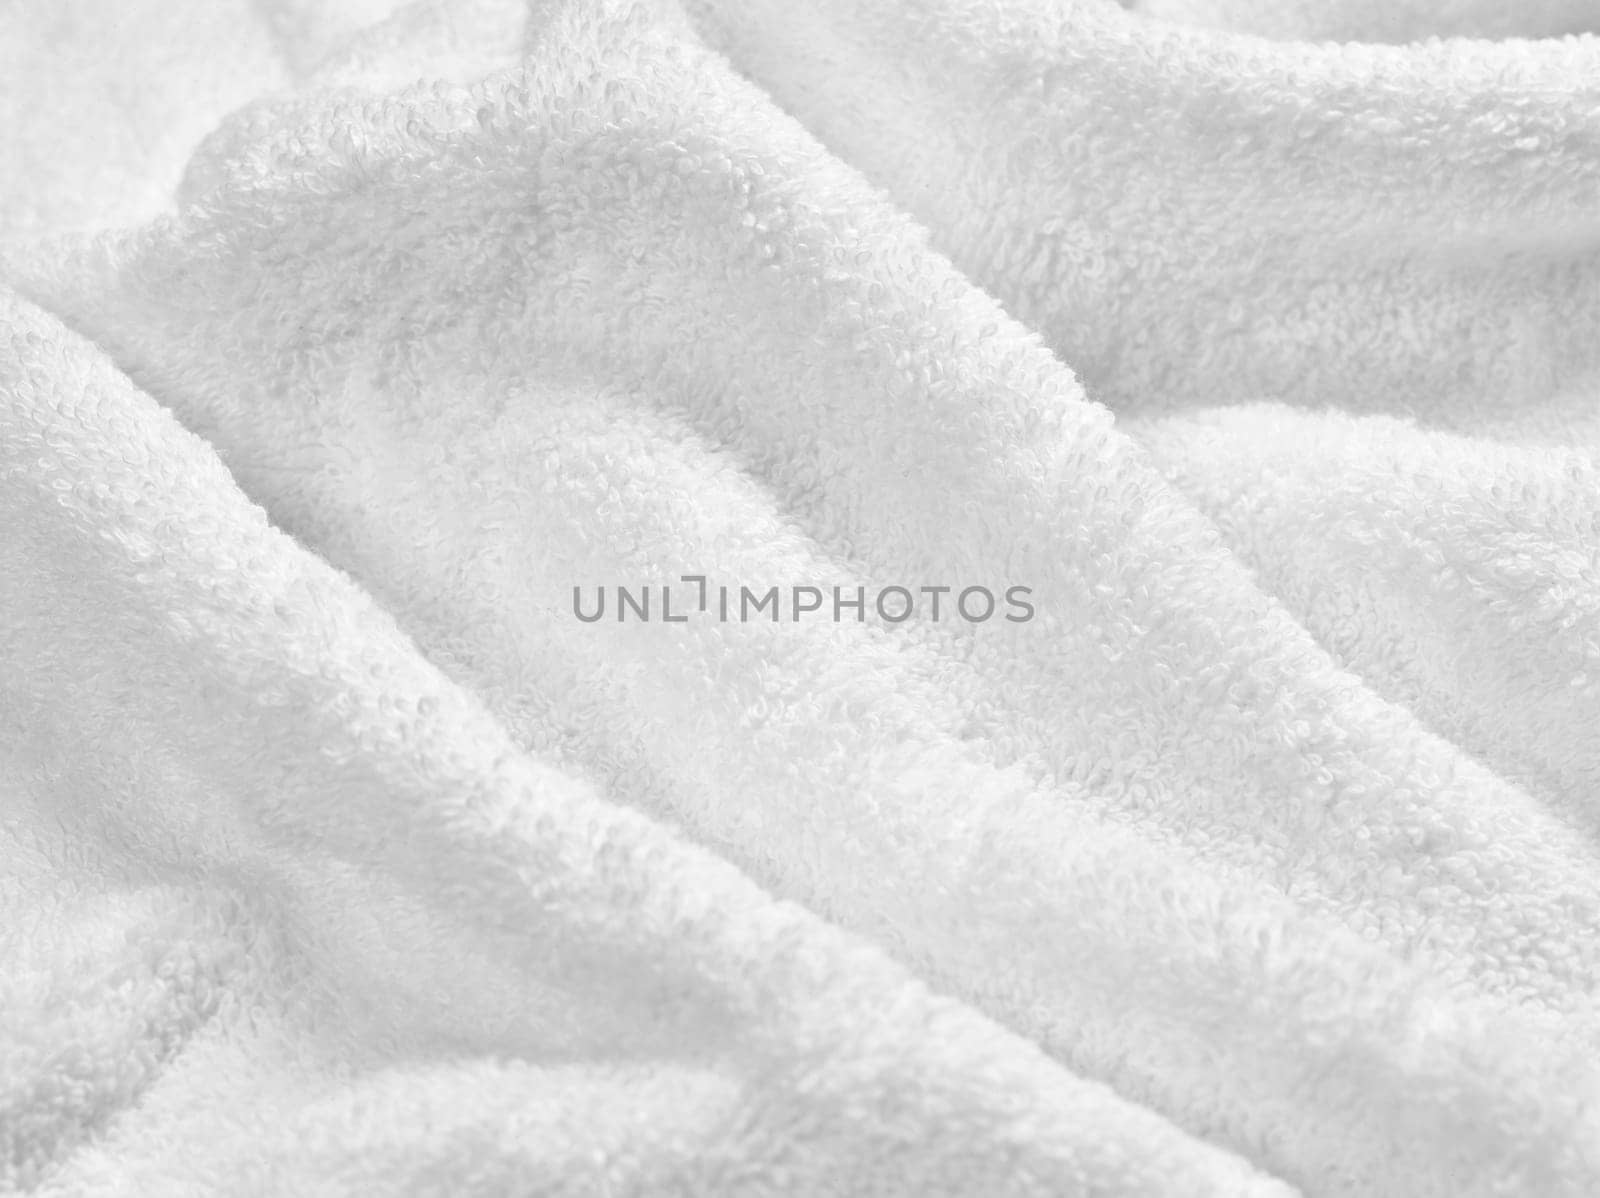 towel cotton bathroom white spa cloth textile by Picsfive